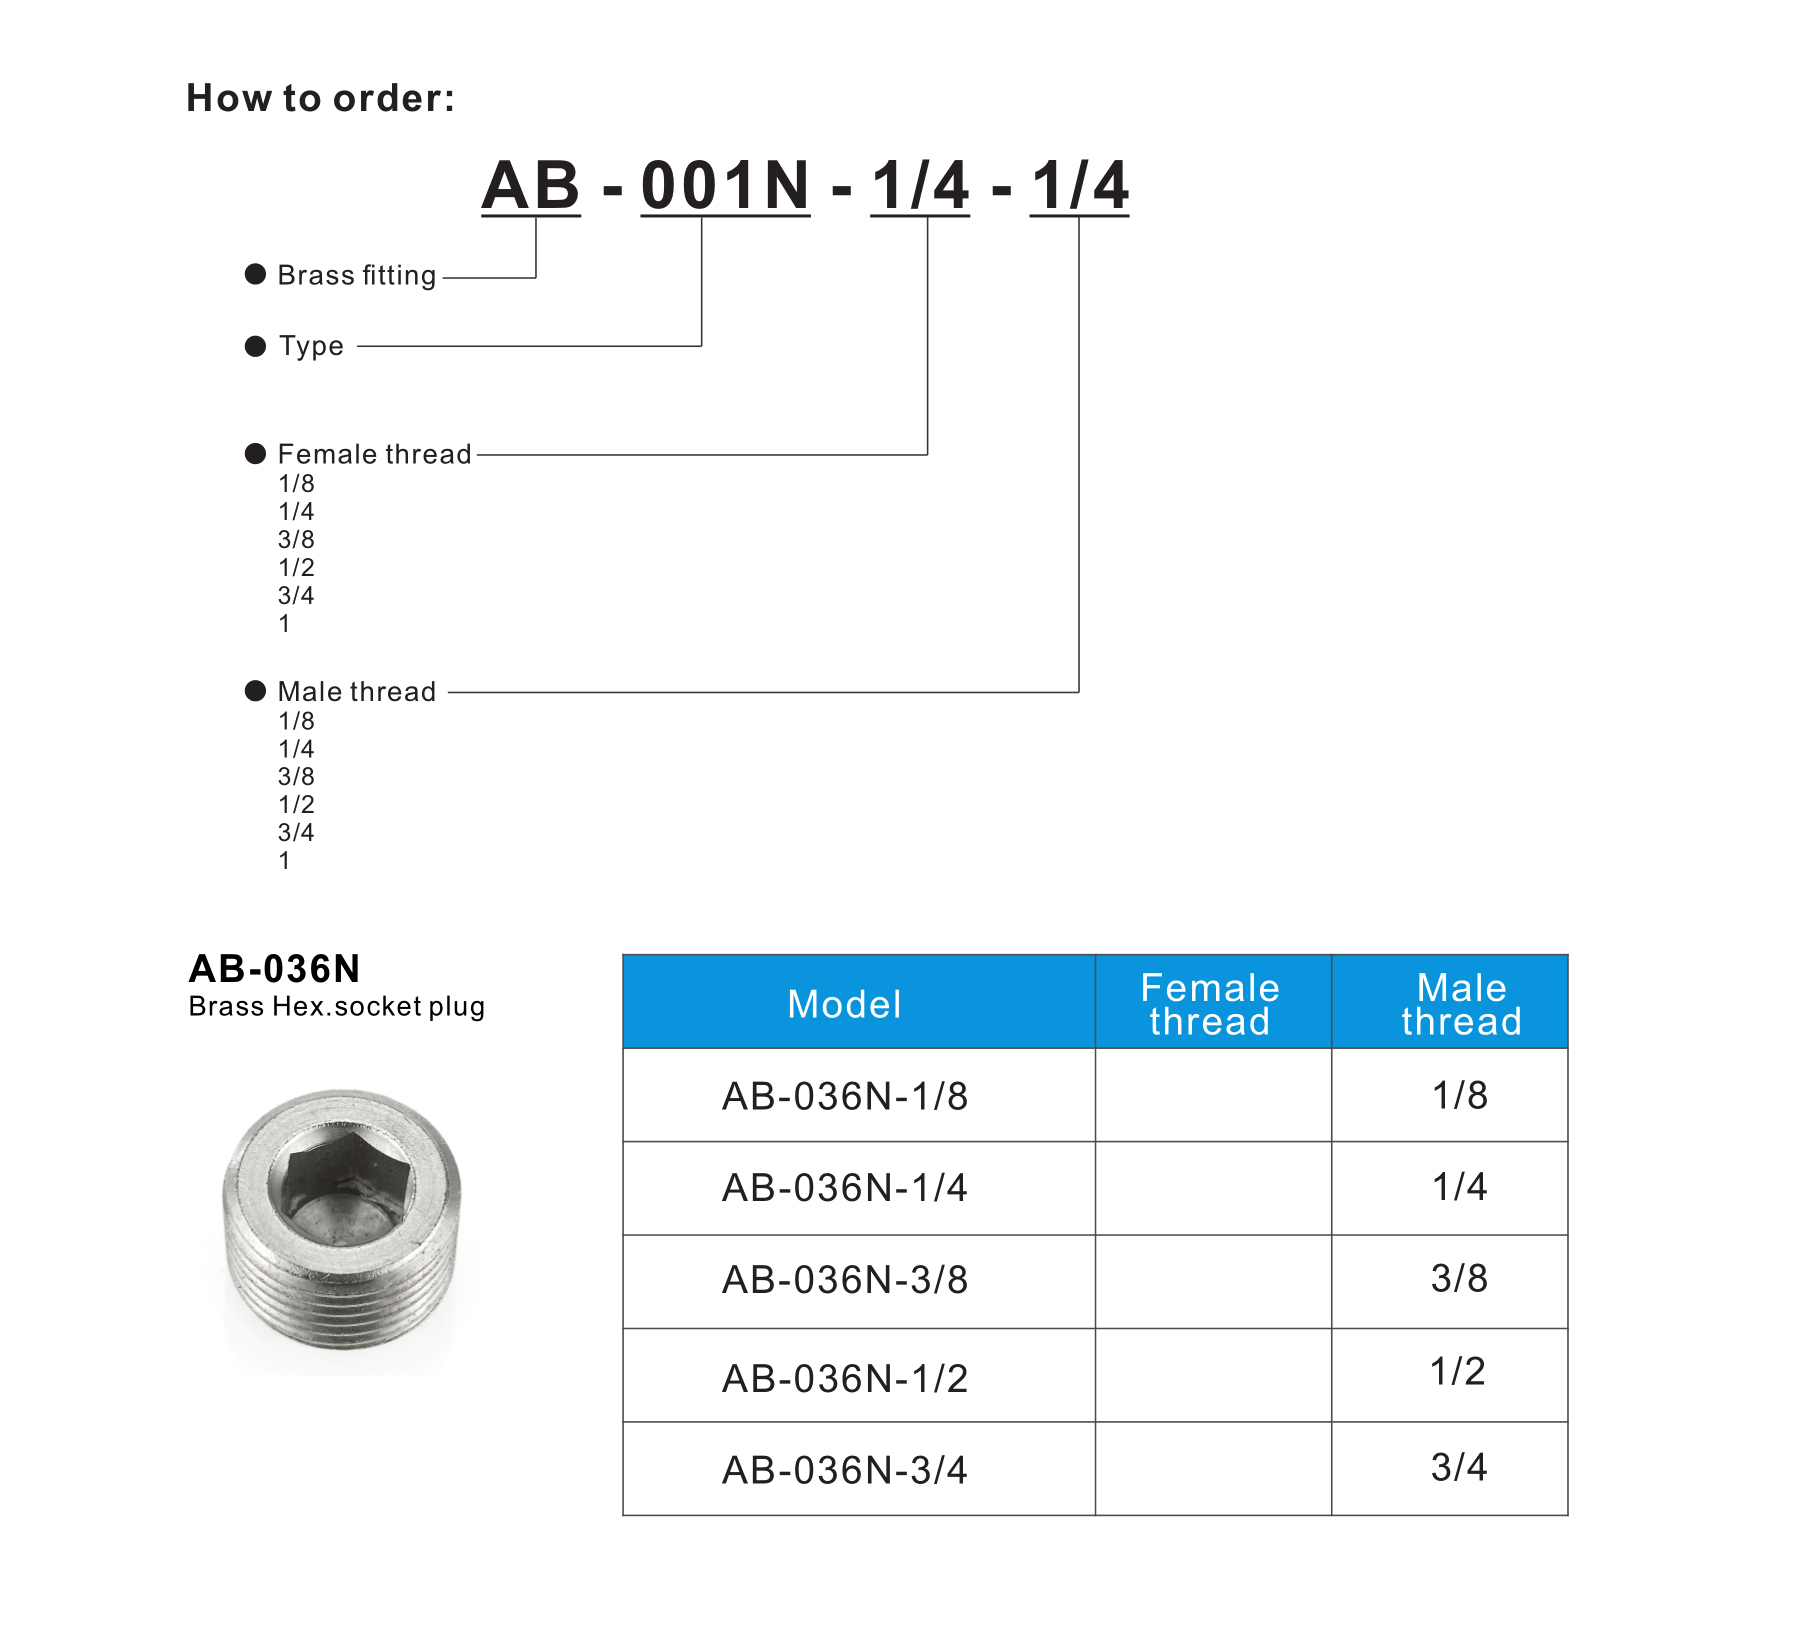 AB-036N Brass Hex.socket plug